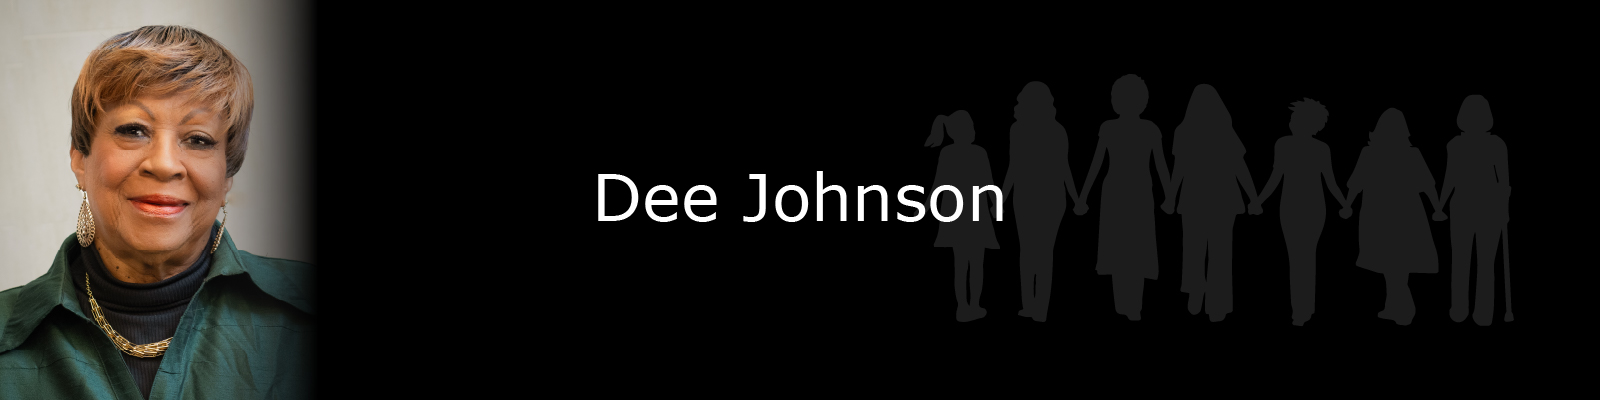 Photo of Dee Johnson.